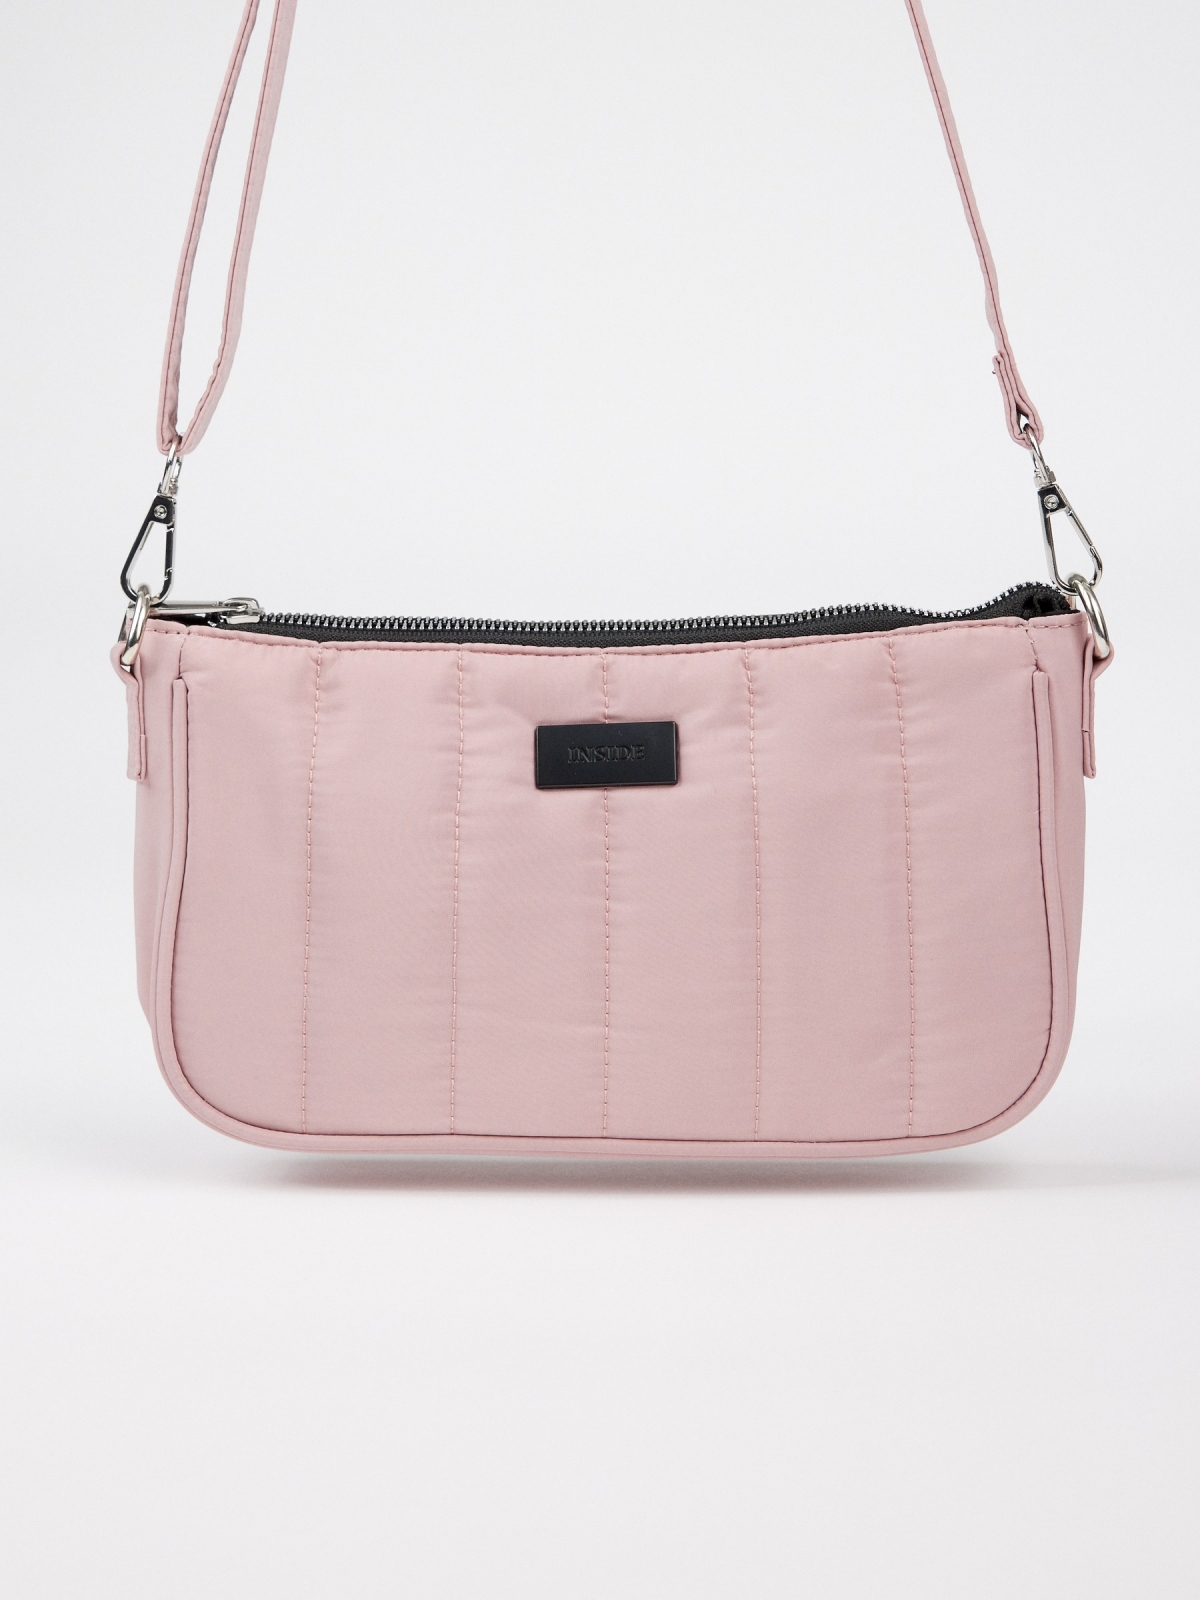 Quilted nylon shoulder bag pink back view